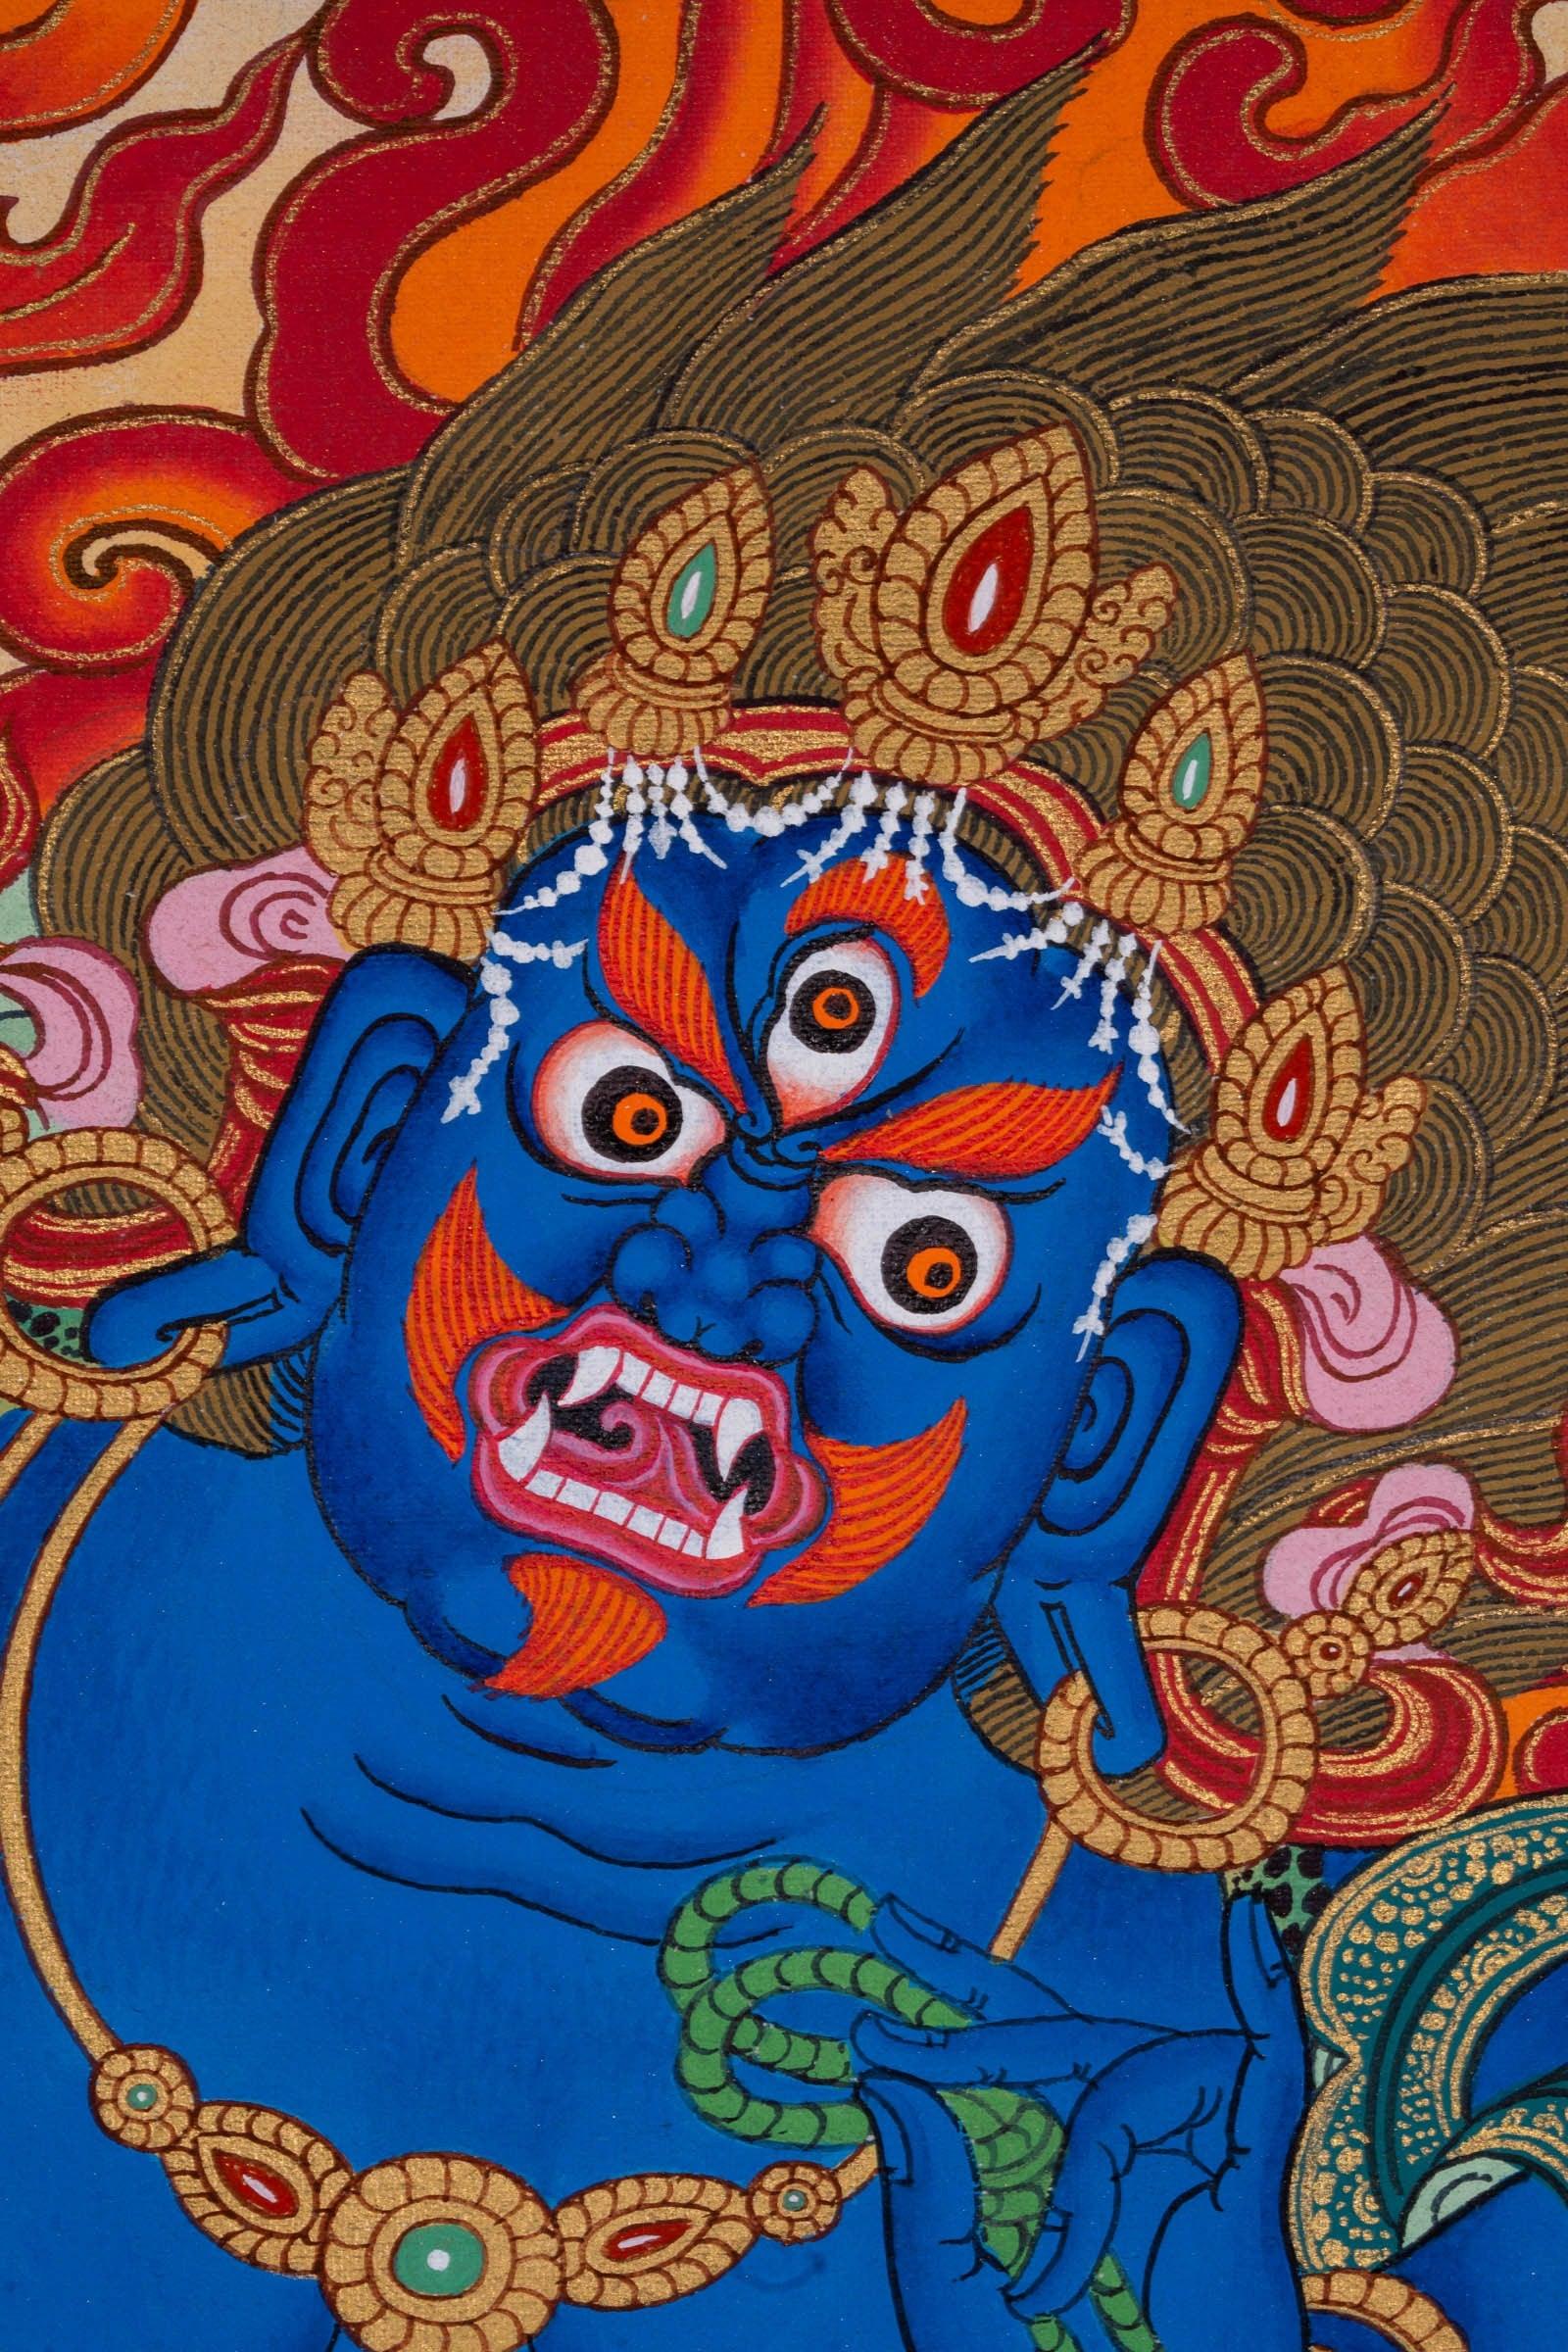 Vajrapani Buddhist Tibetan Thangka Painting - Himalayas Shop